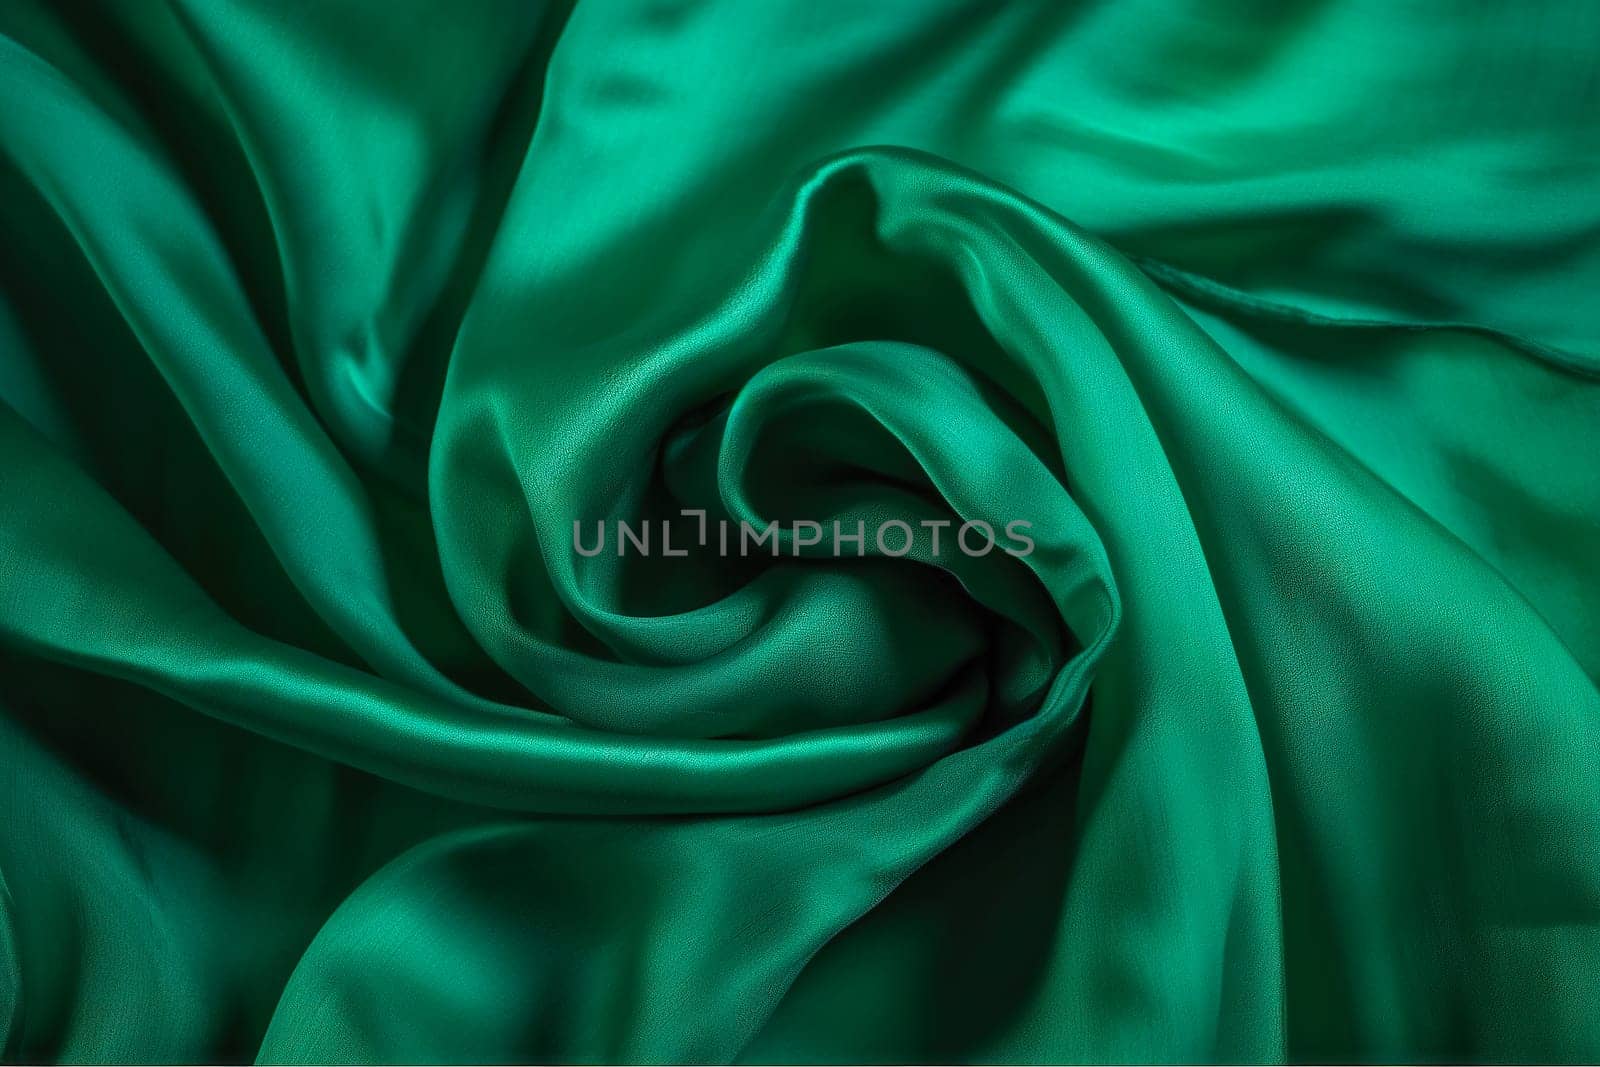 Texture of green silk fabric. Beautiful emerald green soft silk fabric background.